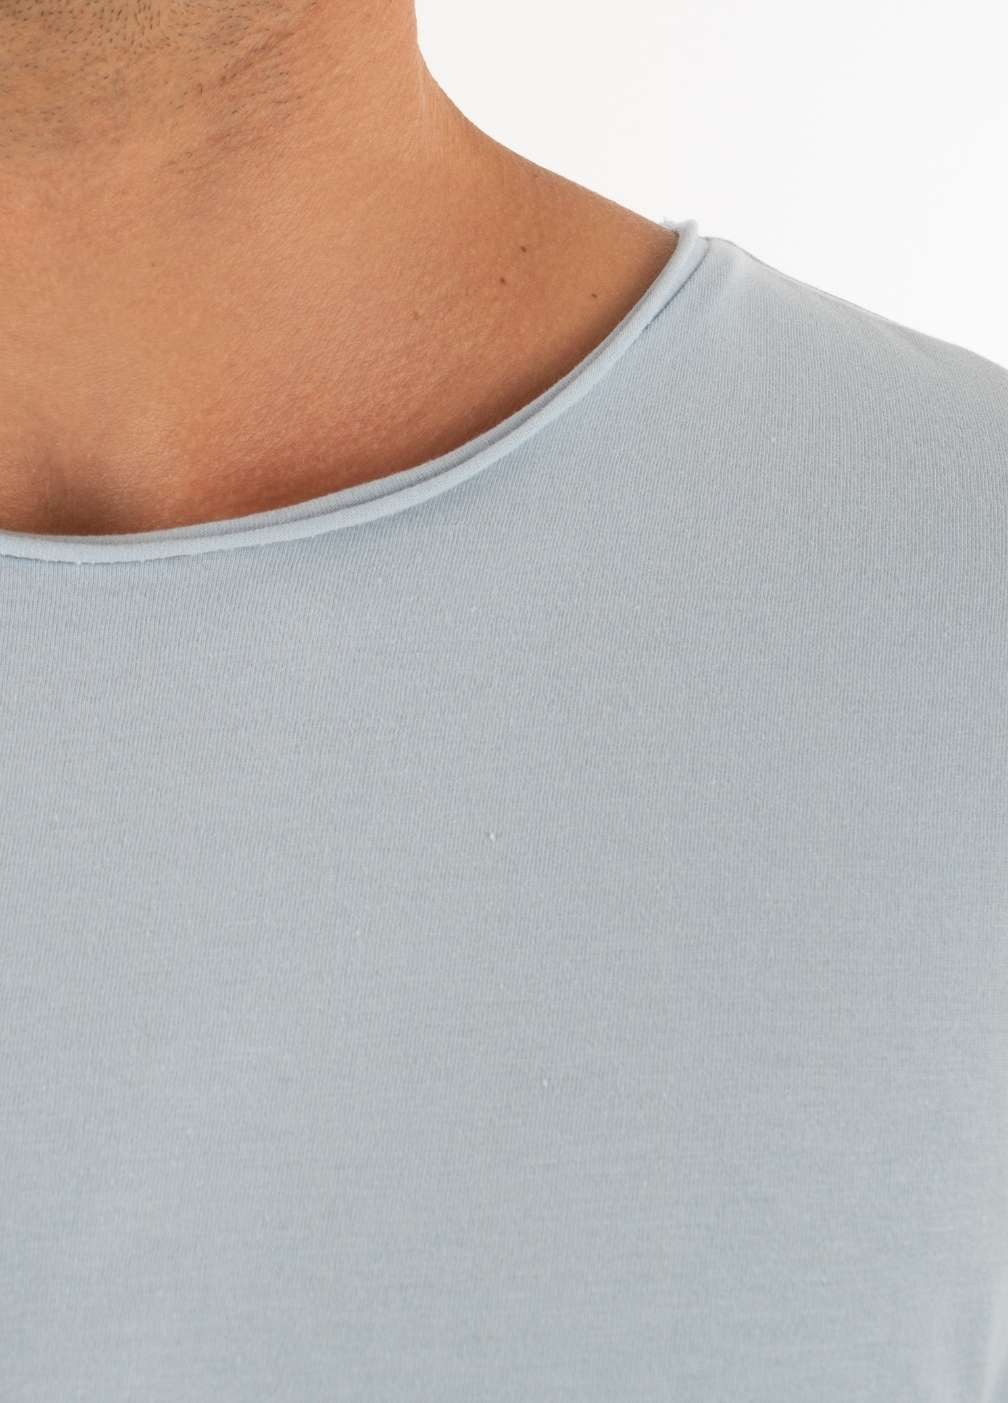 BLUE FOG T-SHIRT PRINT closeup - image of shirt collar - 100% organic cotton t shirts